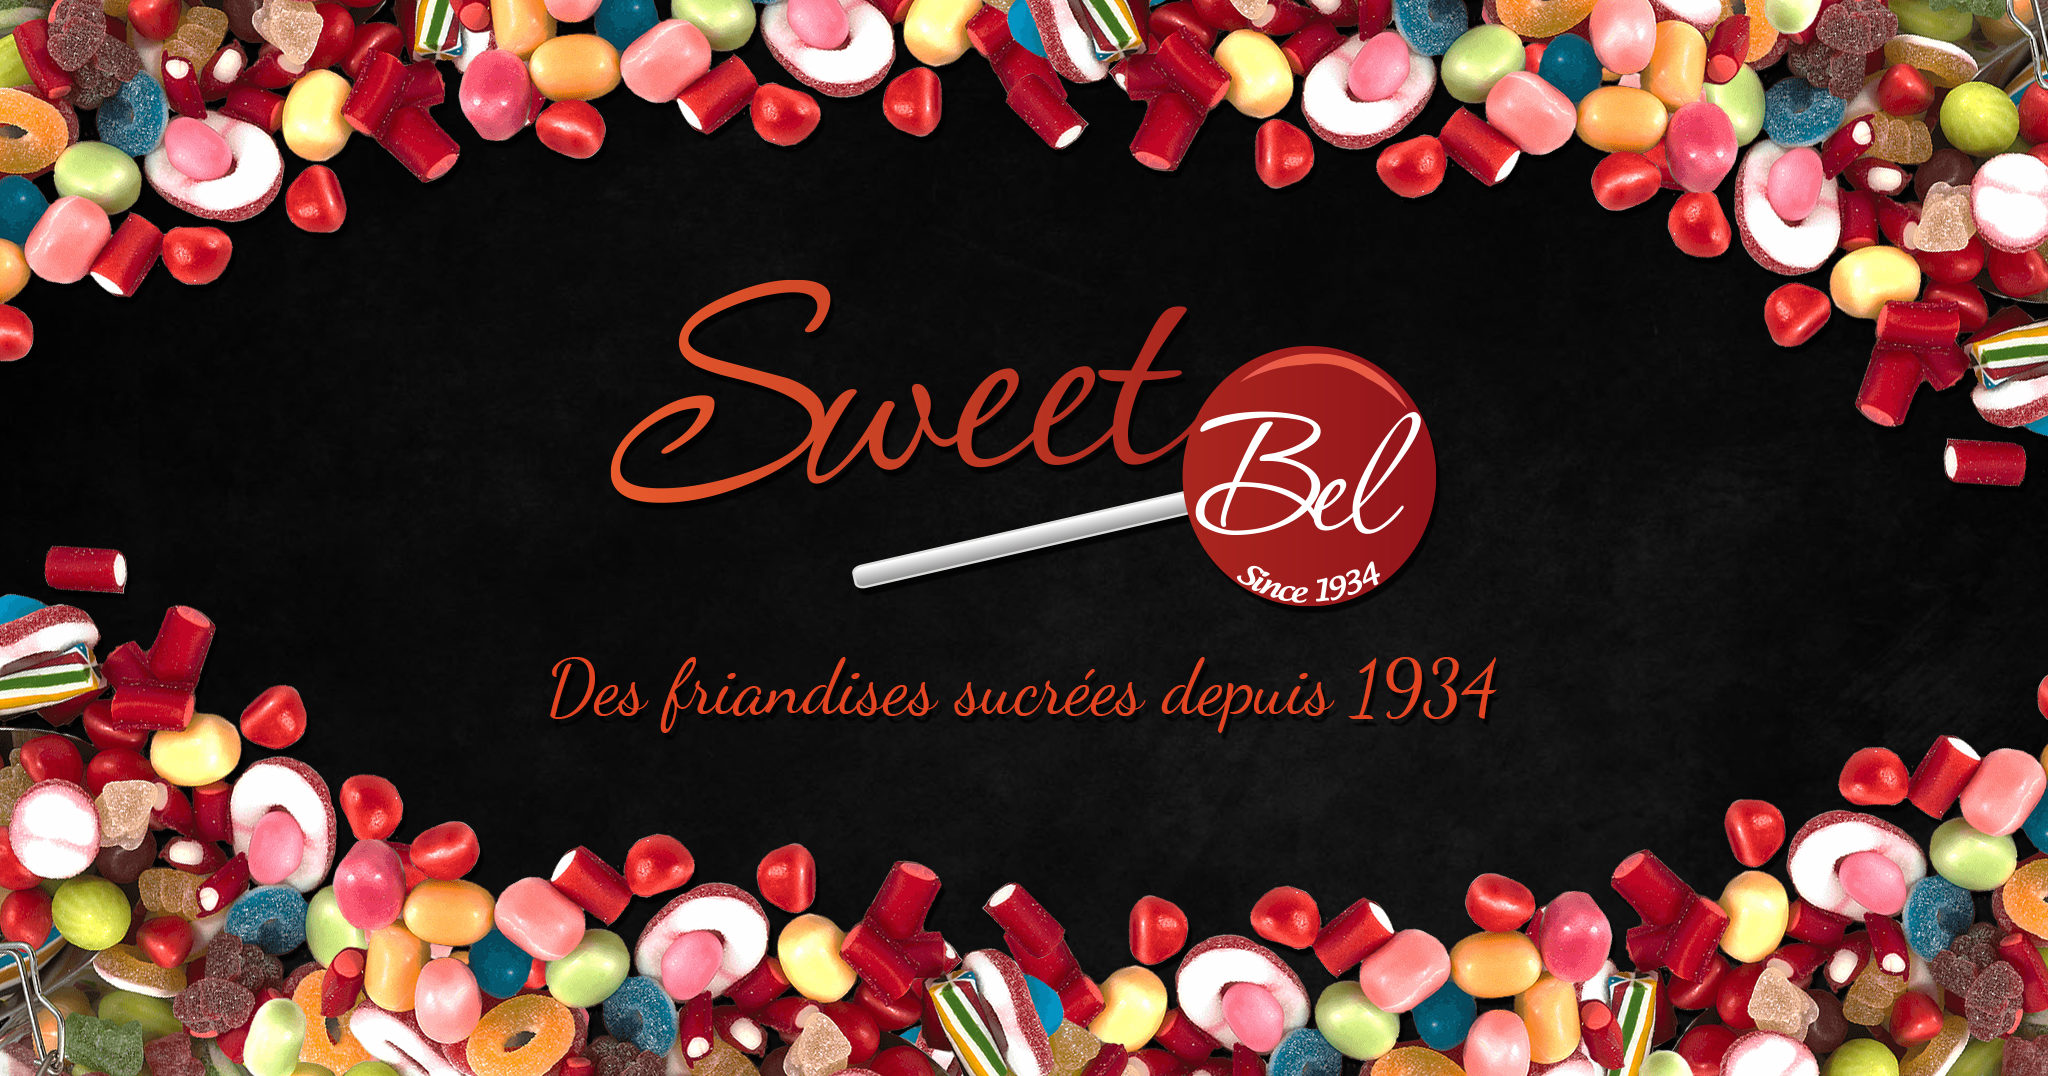 Sweetbel Be Achat De Bonbons En Ligne Dragibus Fraises